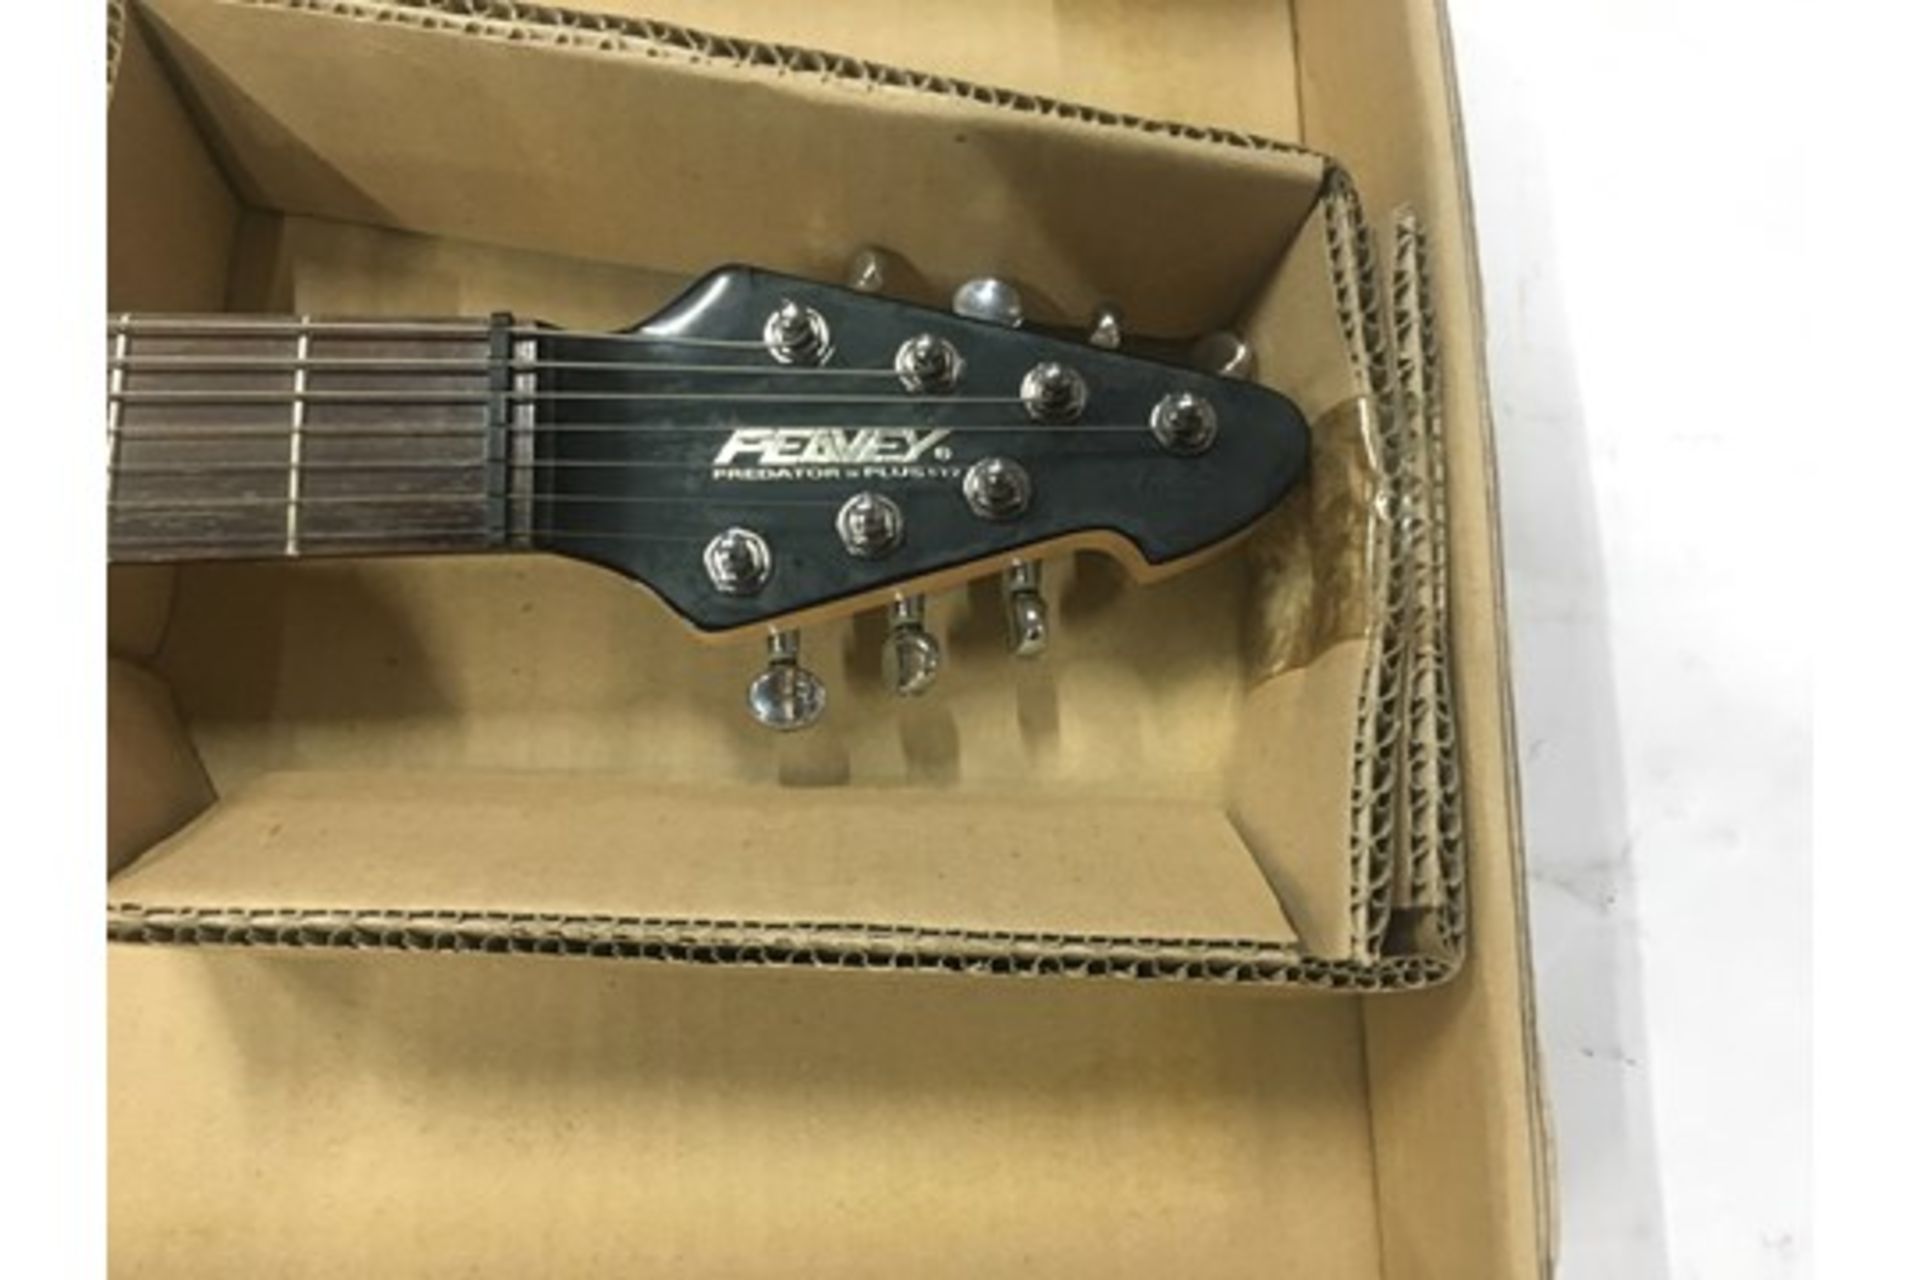 Peavey Predator Plus ST7 Electric Guitar - Image 3 of 3